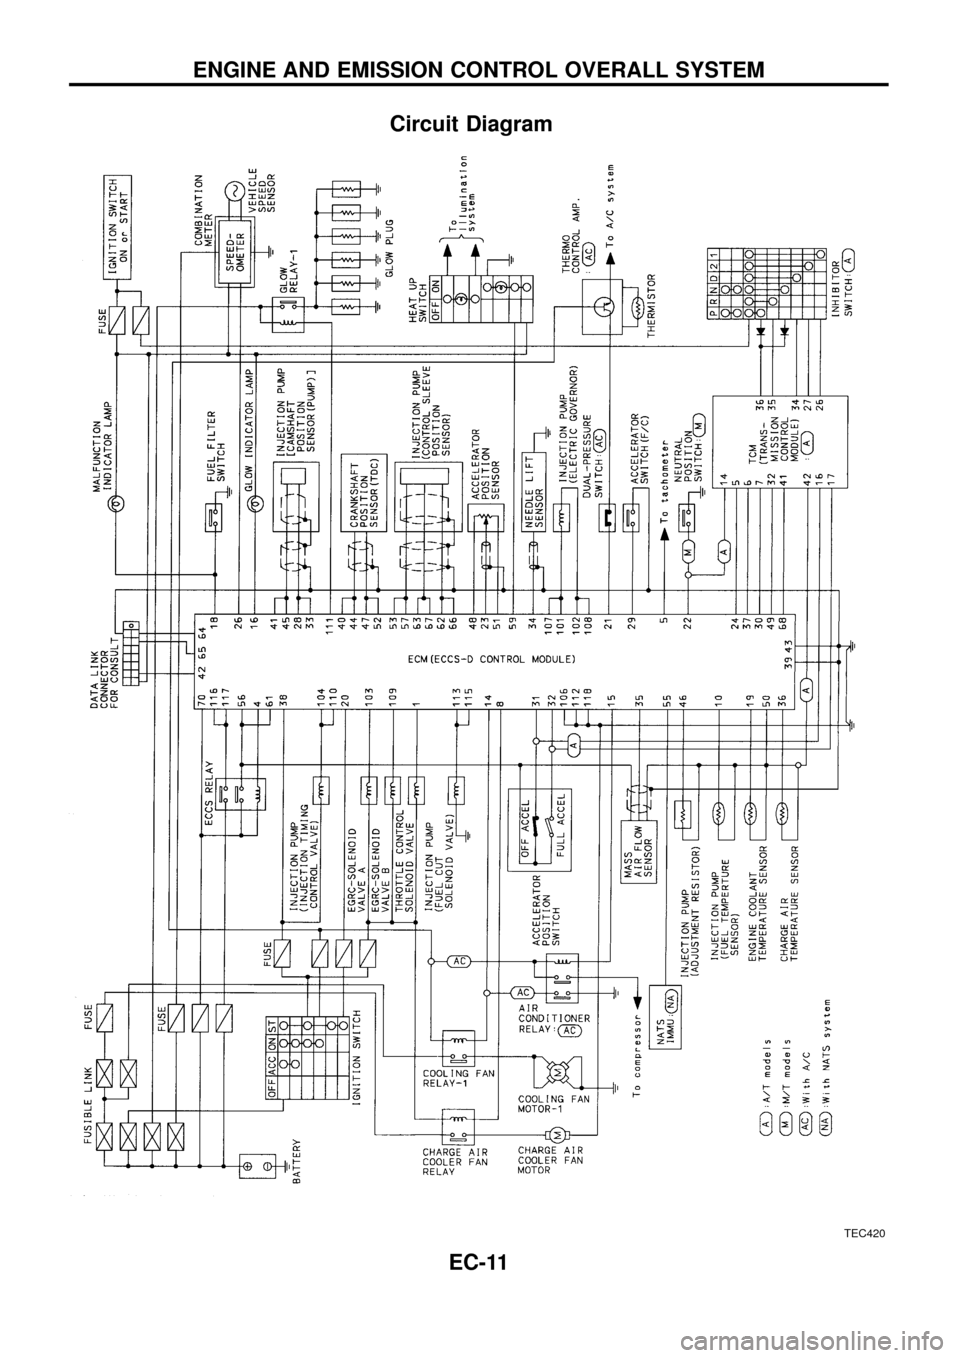 NISSAN PATROL 1998 Y61 / 5.G Engine Control Workshop Manual Circuit Diagram
TEC420
ENGINE AND EMISSION CONTROL OVERALL SYSTEM
EC-11 